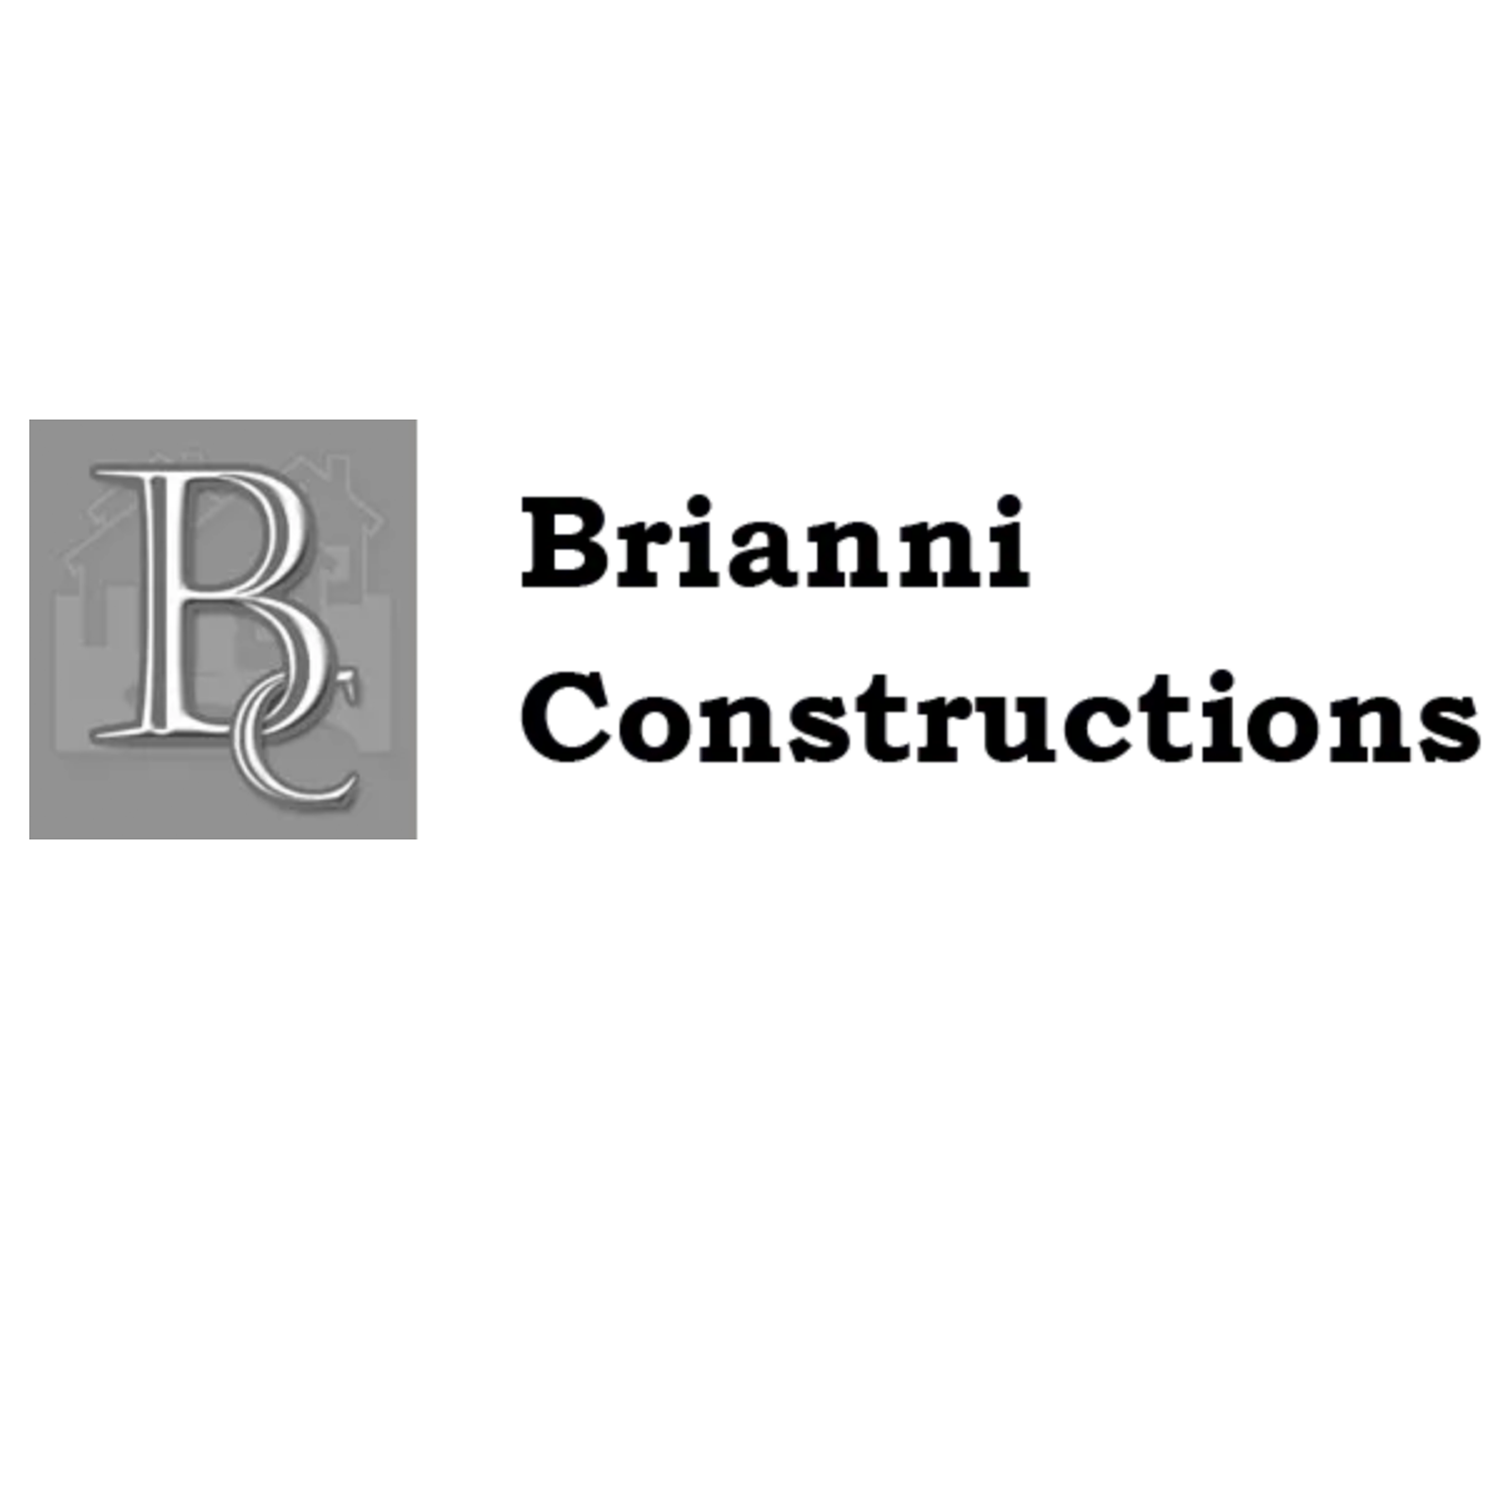 Brianni Constructions